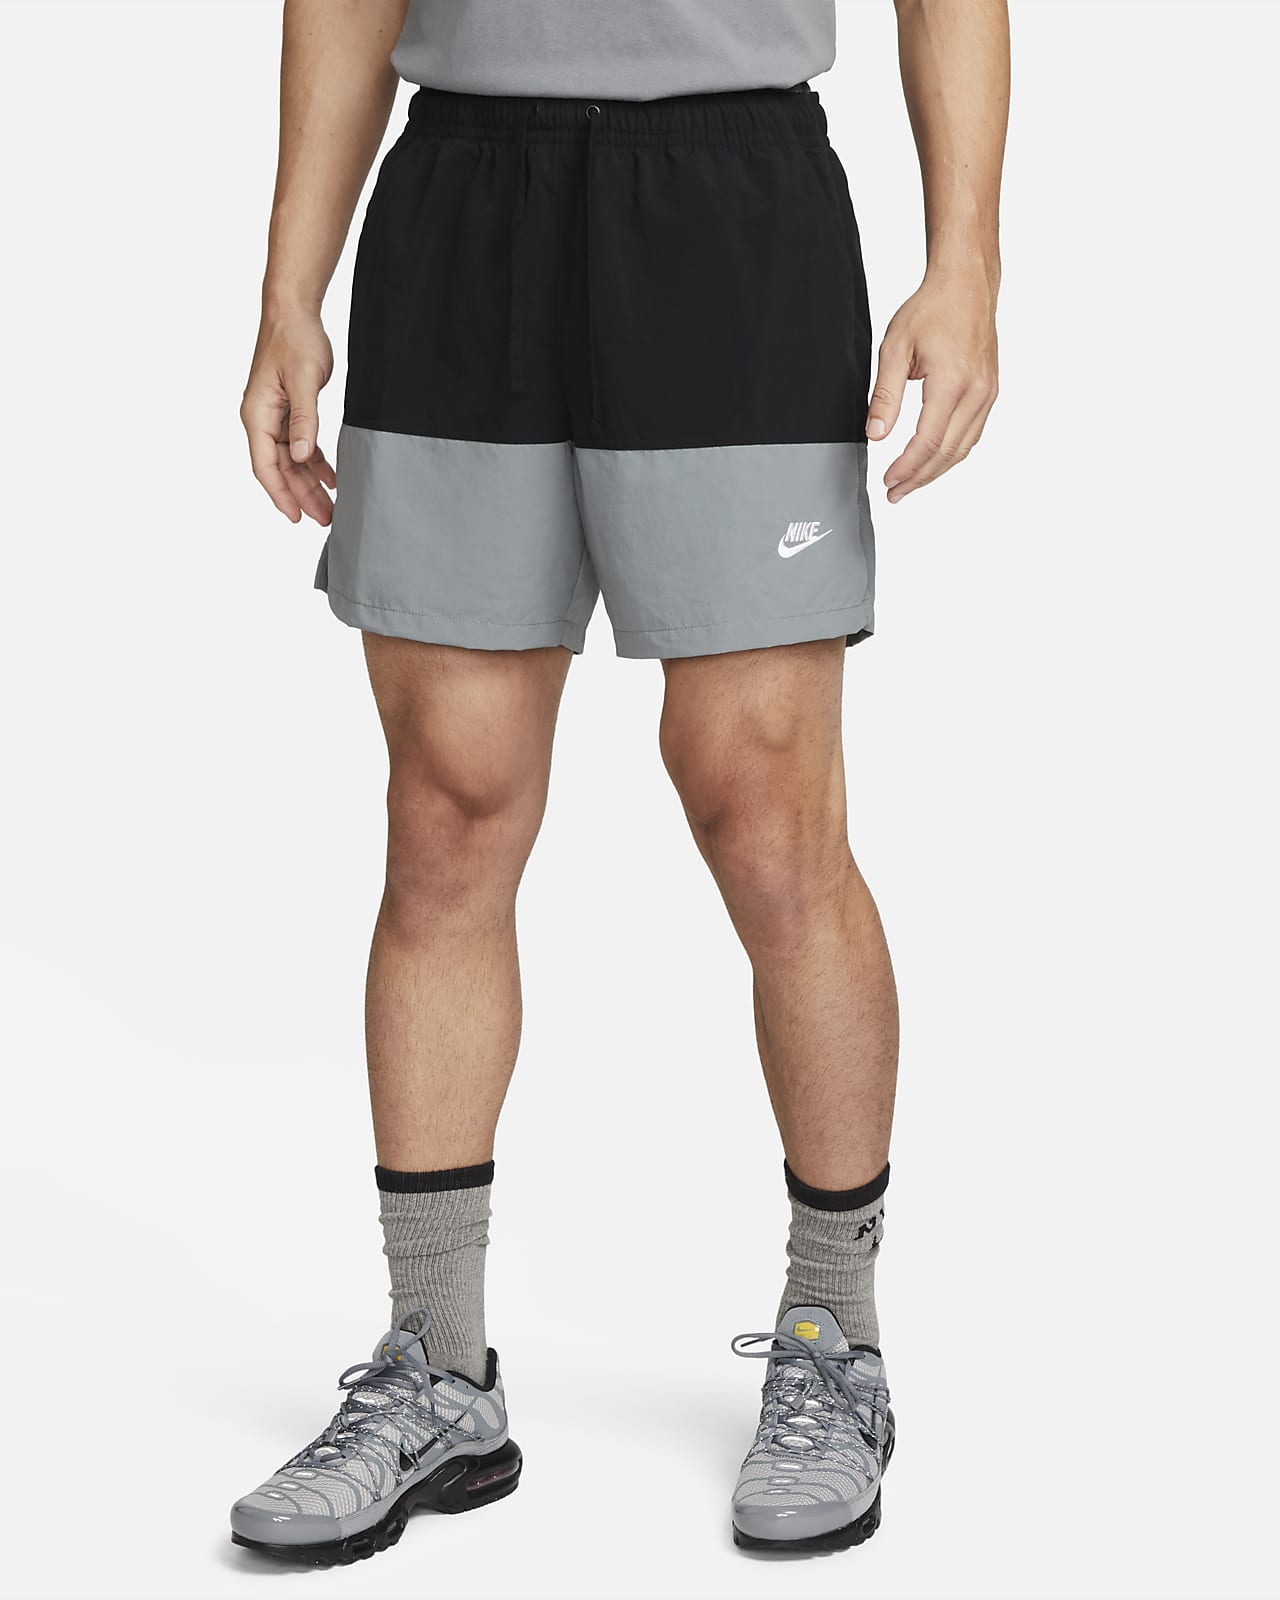 gray nike shorts  Grey nike shorts, Grey nikes, Nike shorts